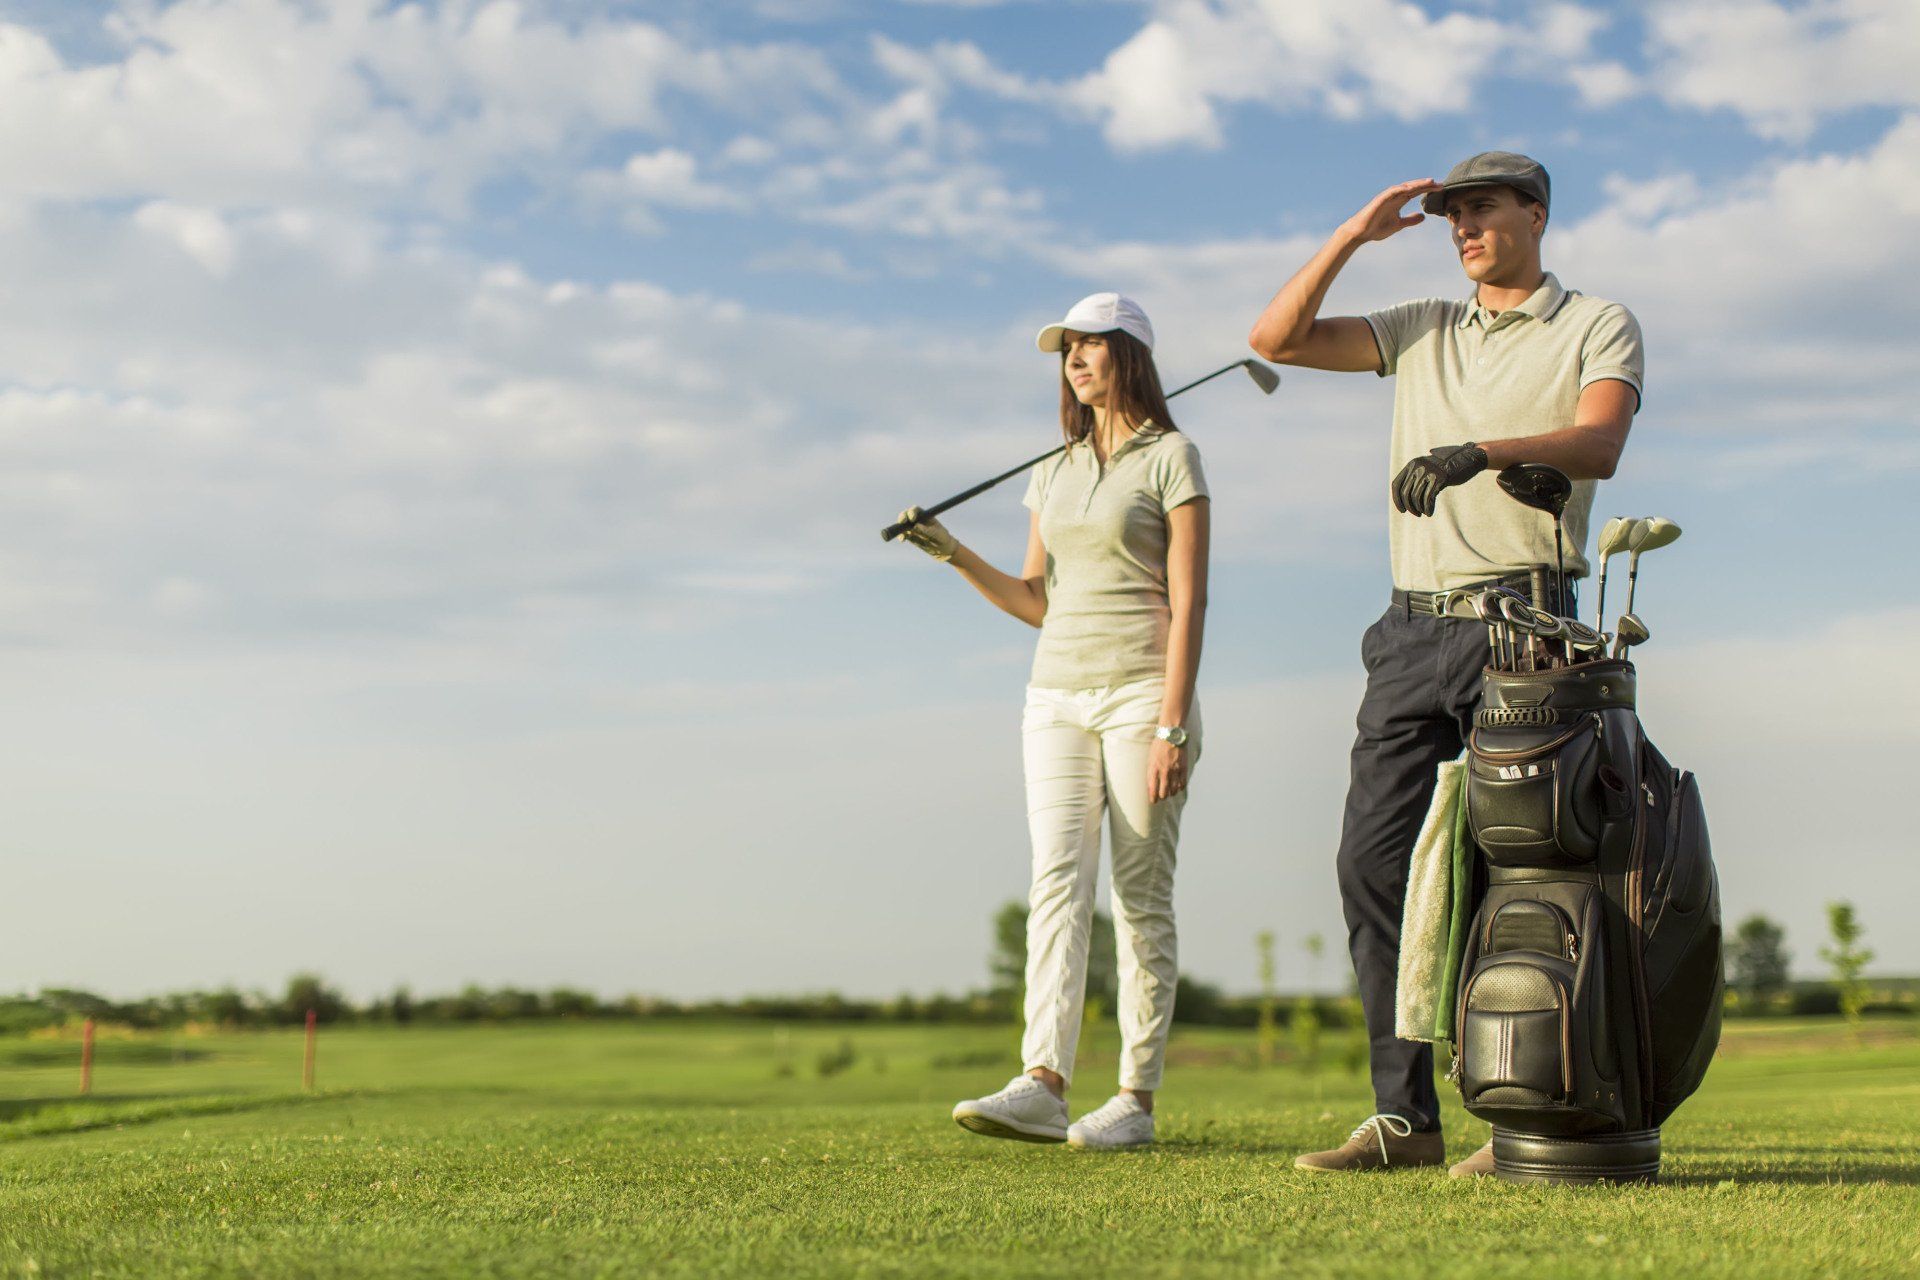 A couple golfing